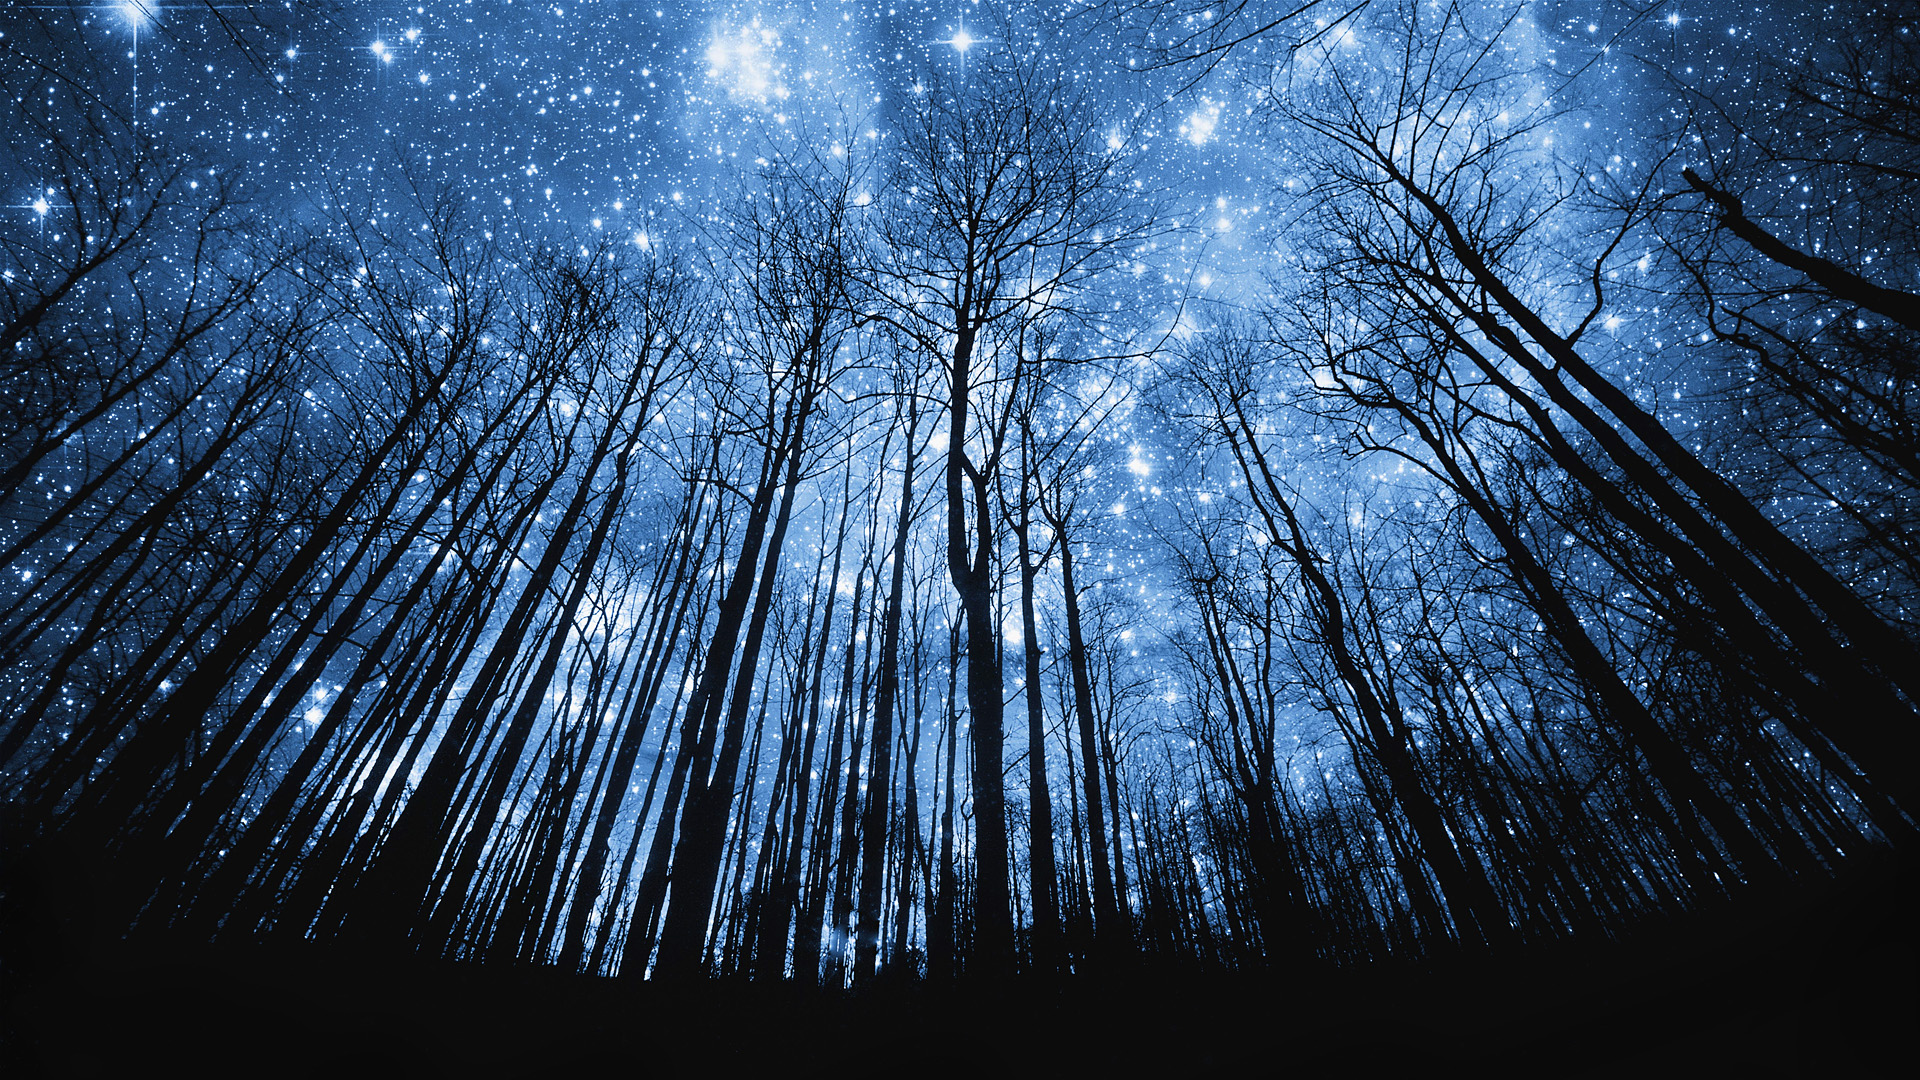 Against Starry Night Sky Tree Silhouette